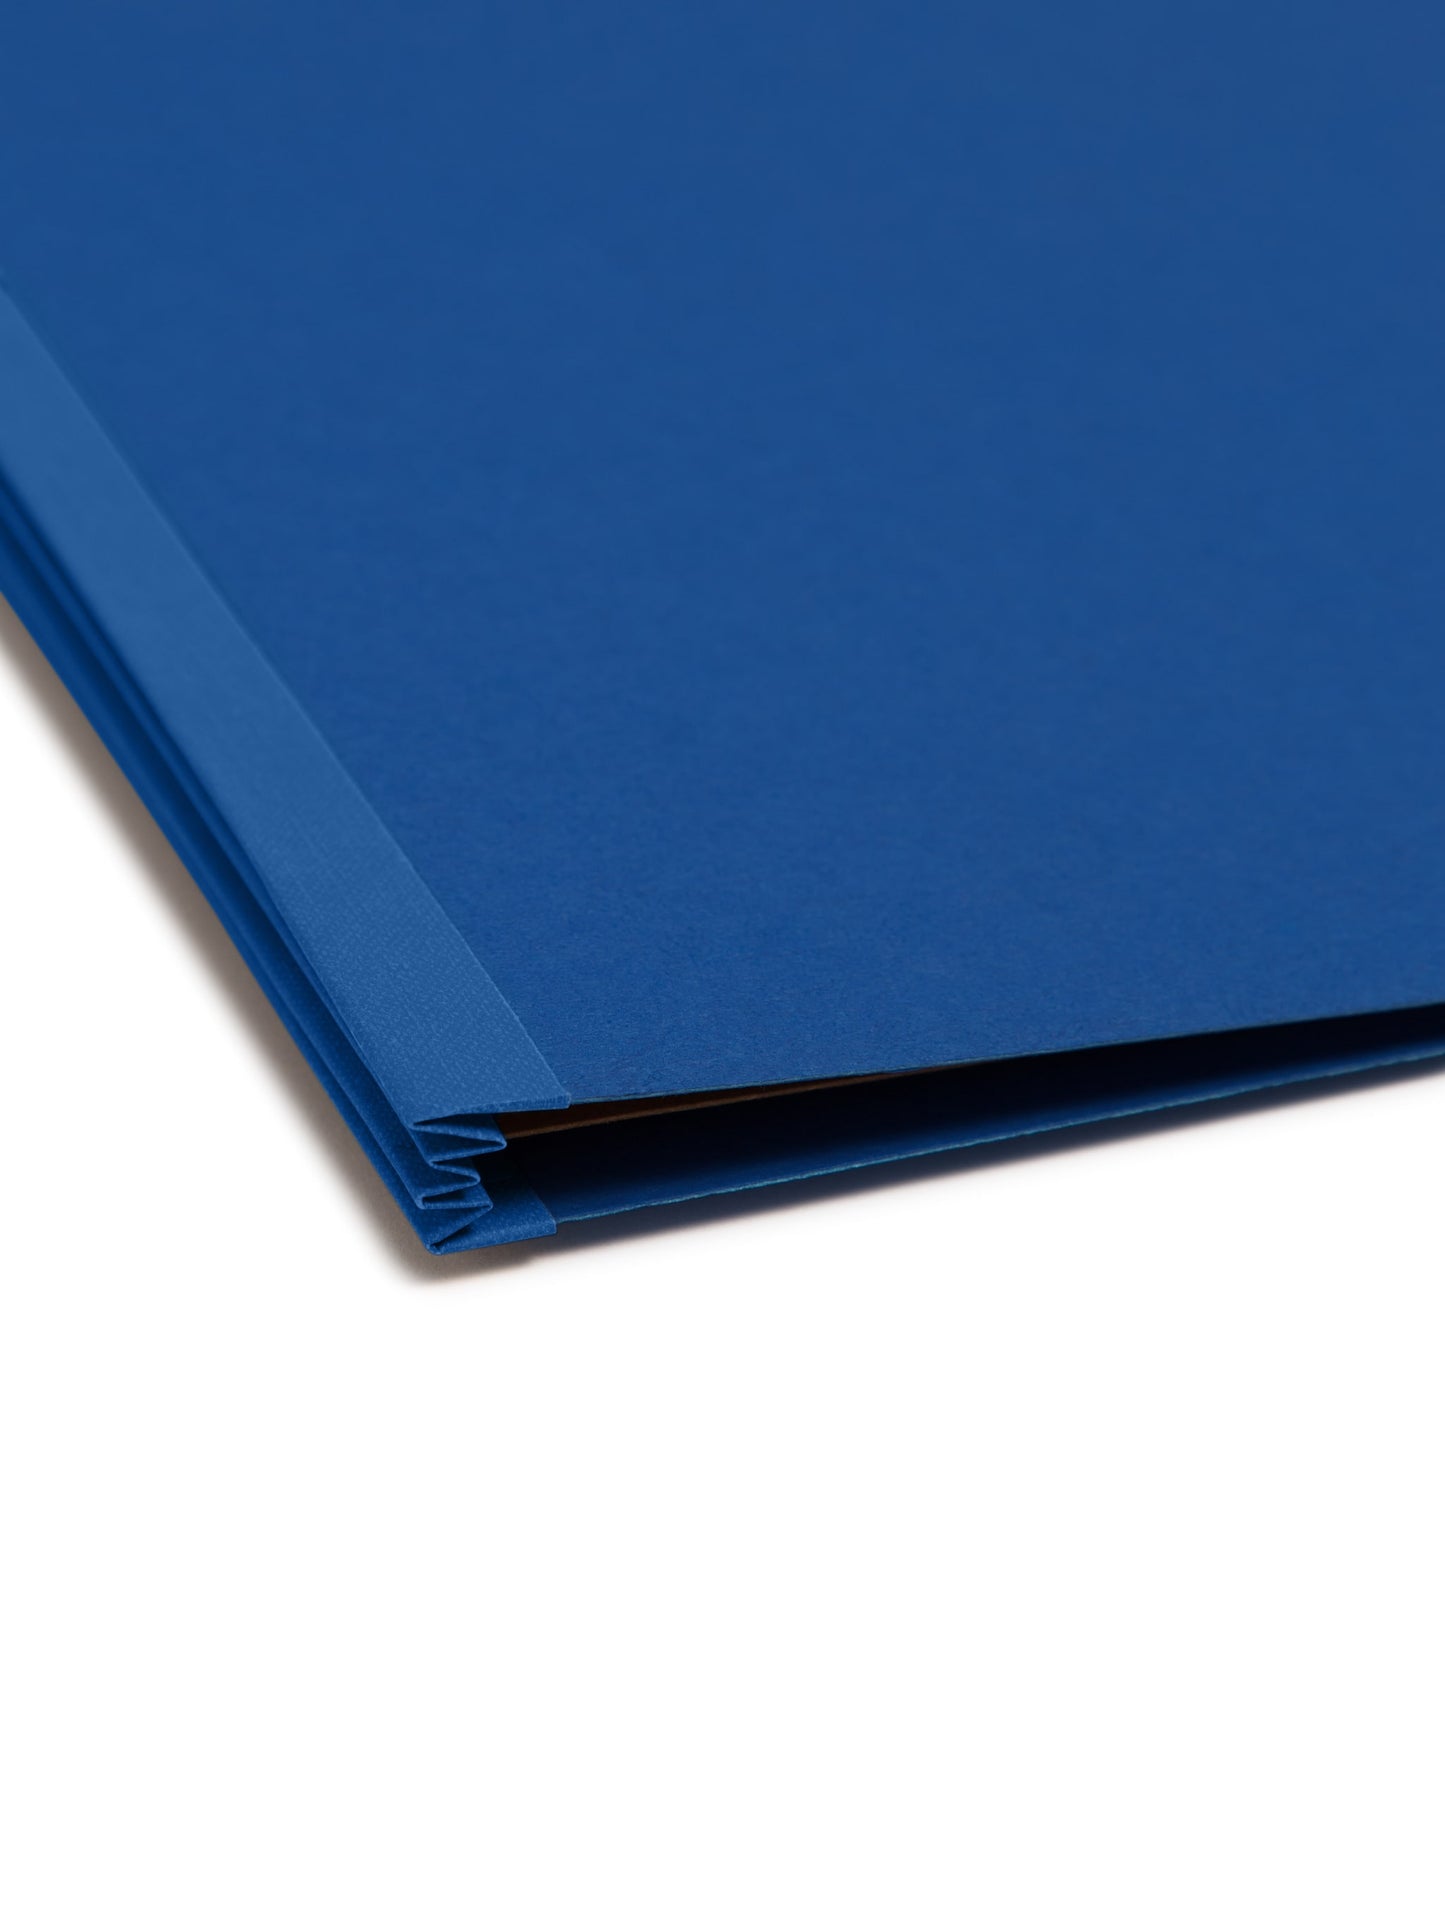 SafeSHIELD® Premium Pressboard Classification File Folders, 2 Dividers, 2 inch Expansion, 2/5-Cut Tab, Dark Blue Color, Legal Size, Set of 0, 30086486192003